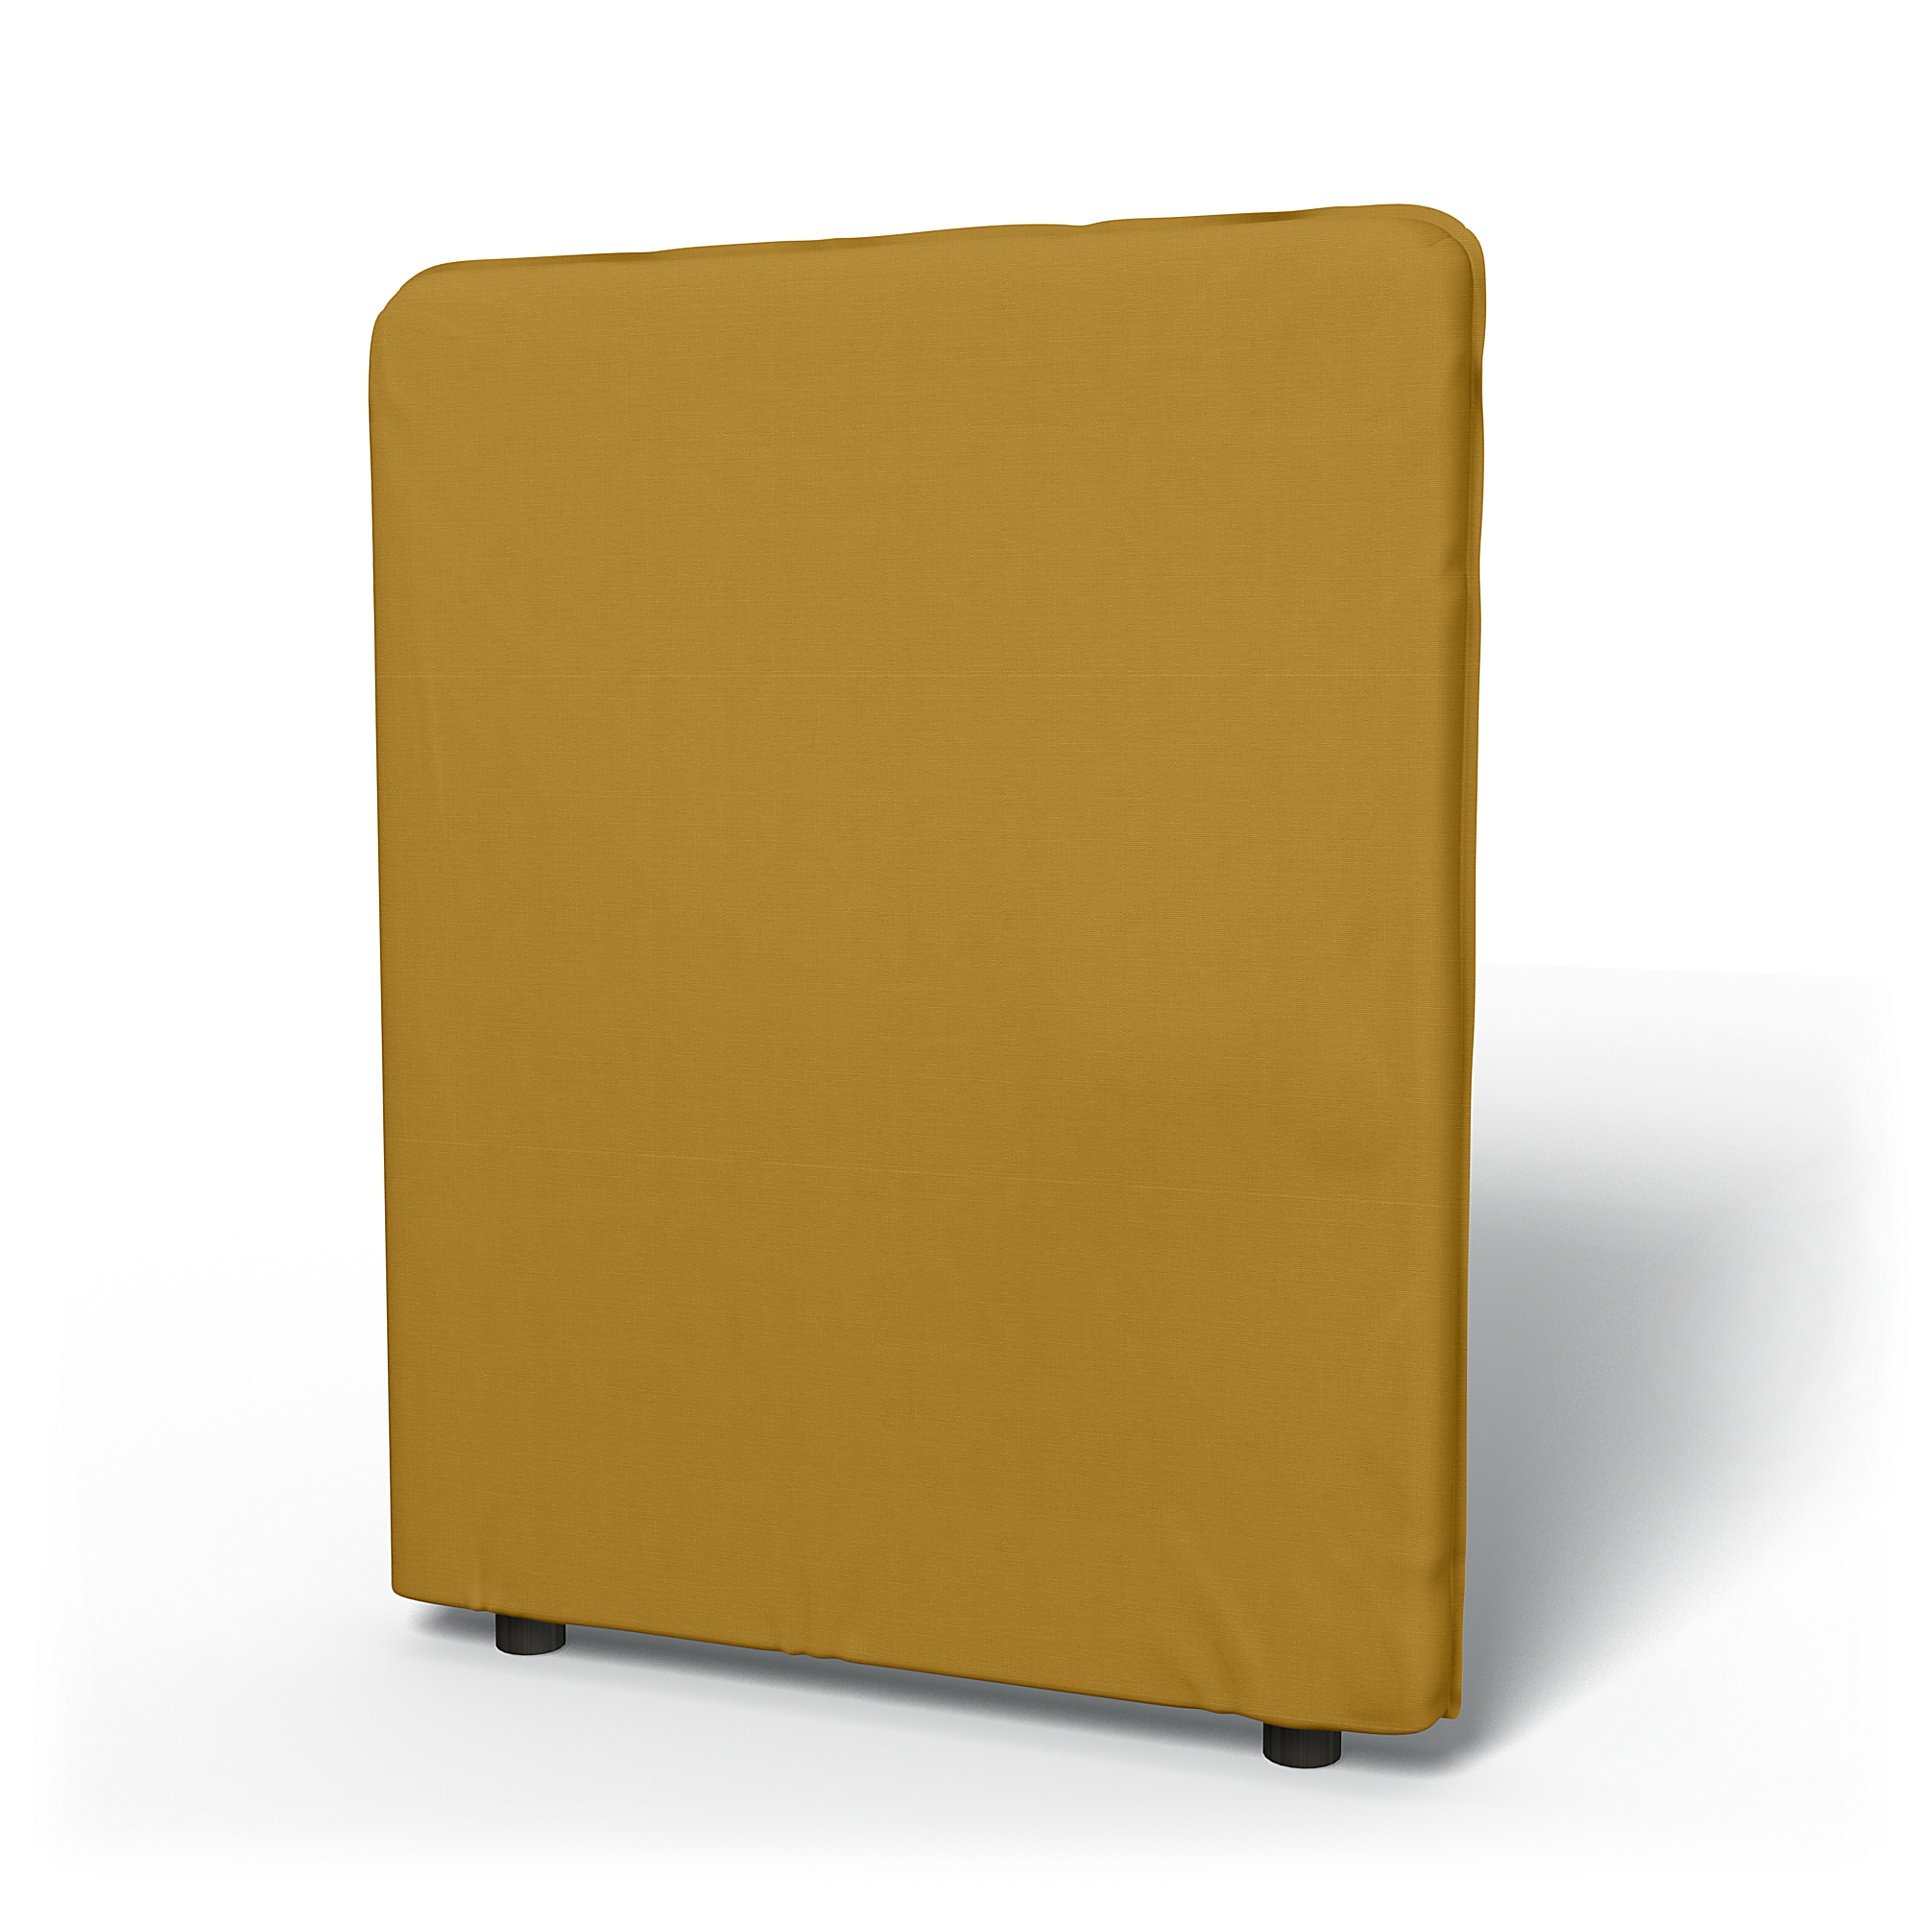 IKEA - Vallentuna High Backrest Cover 80x100cm 32x39in, Honey Mustard, Cotton - Bemz